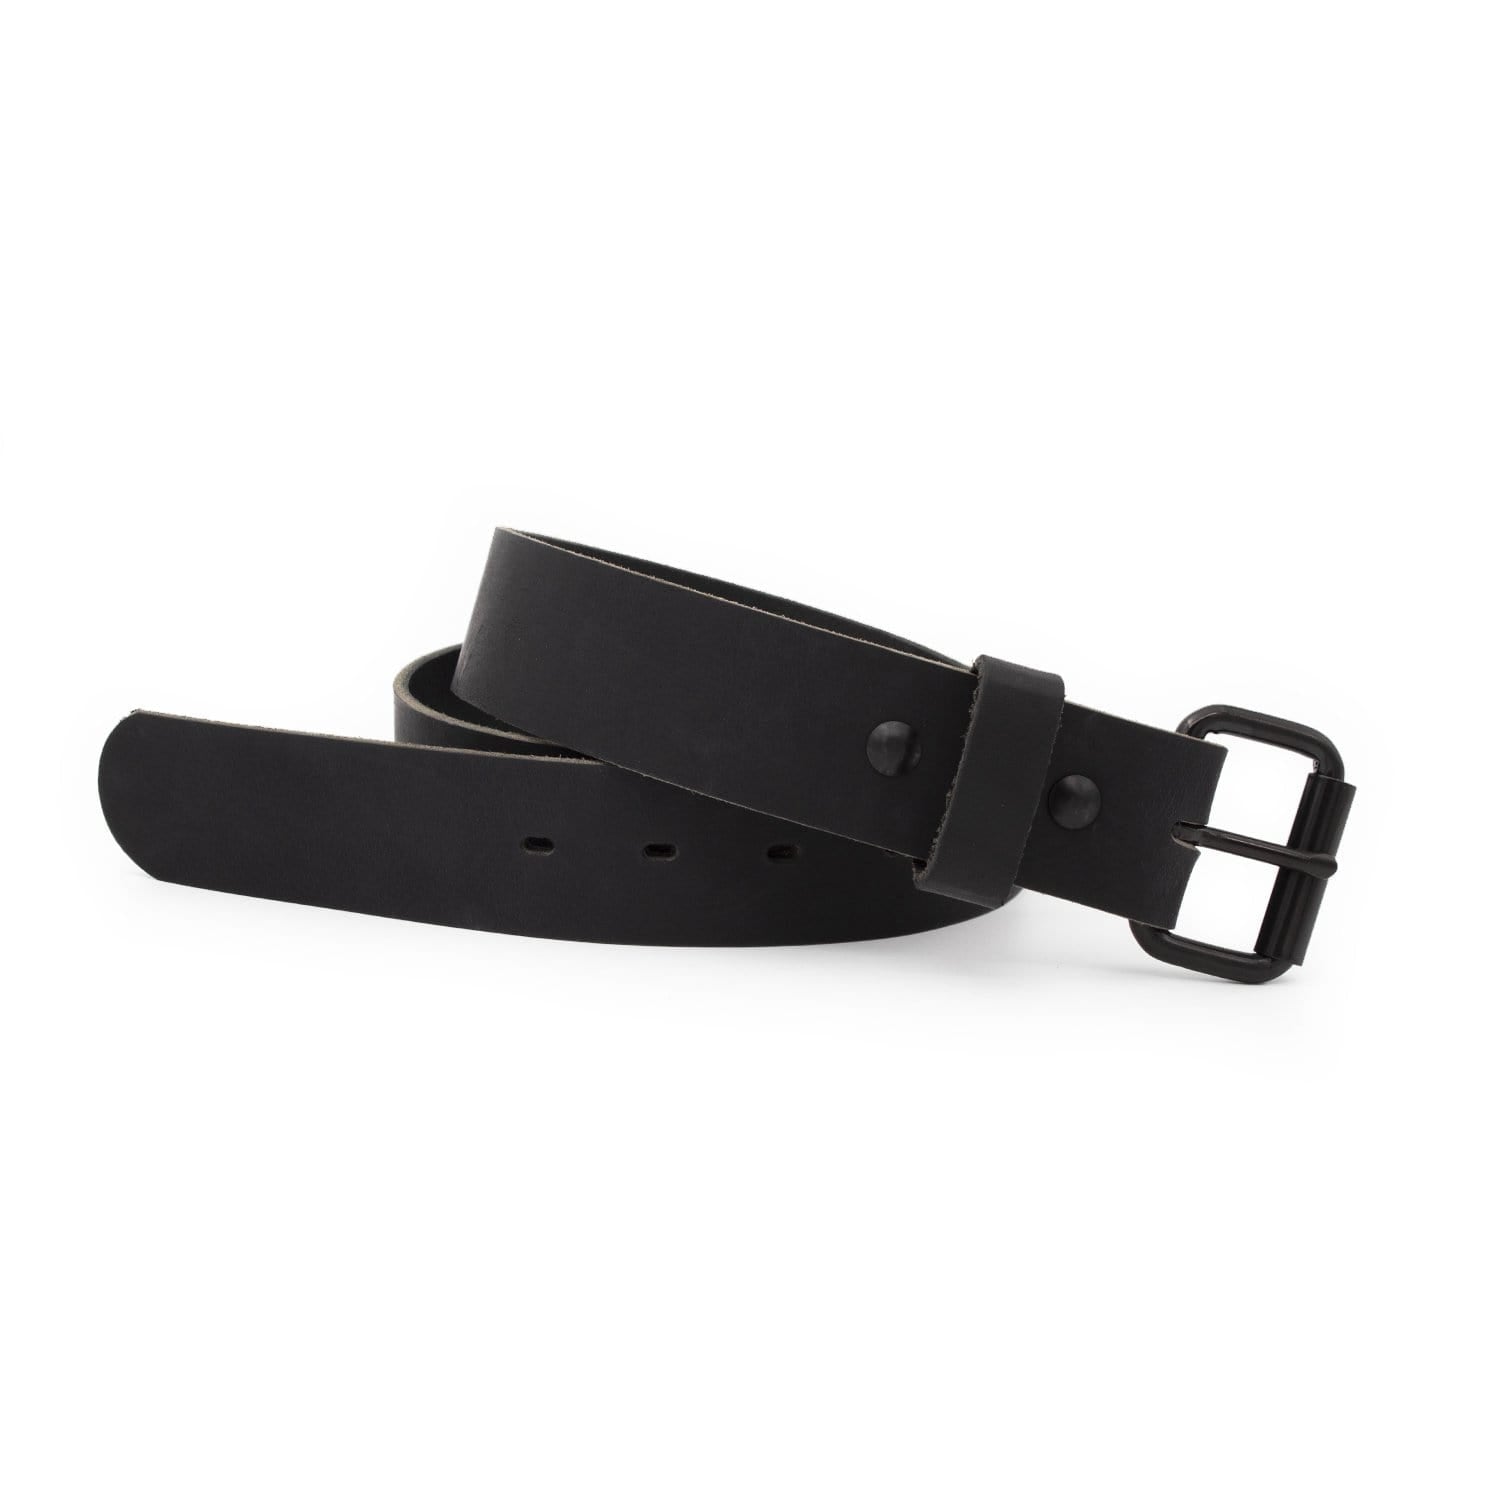 Standard Belt - Black, Made in the USA